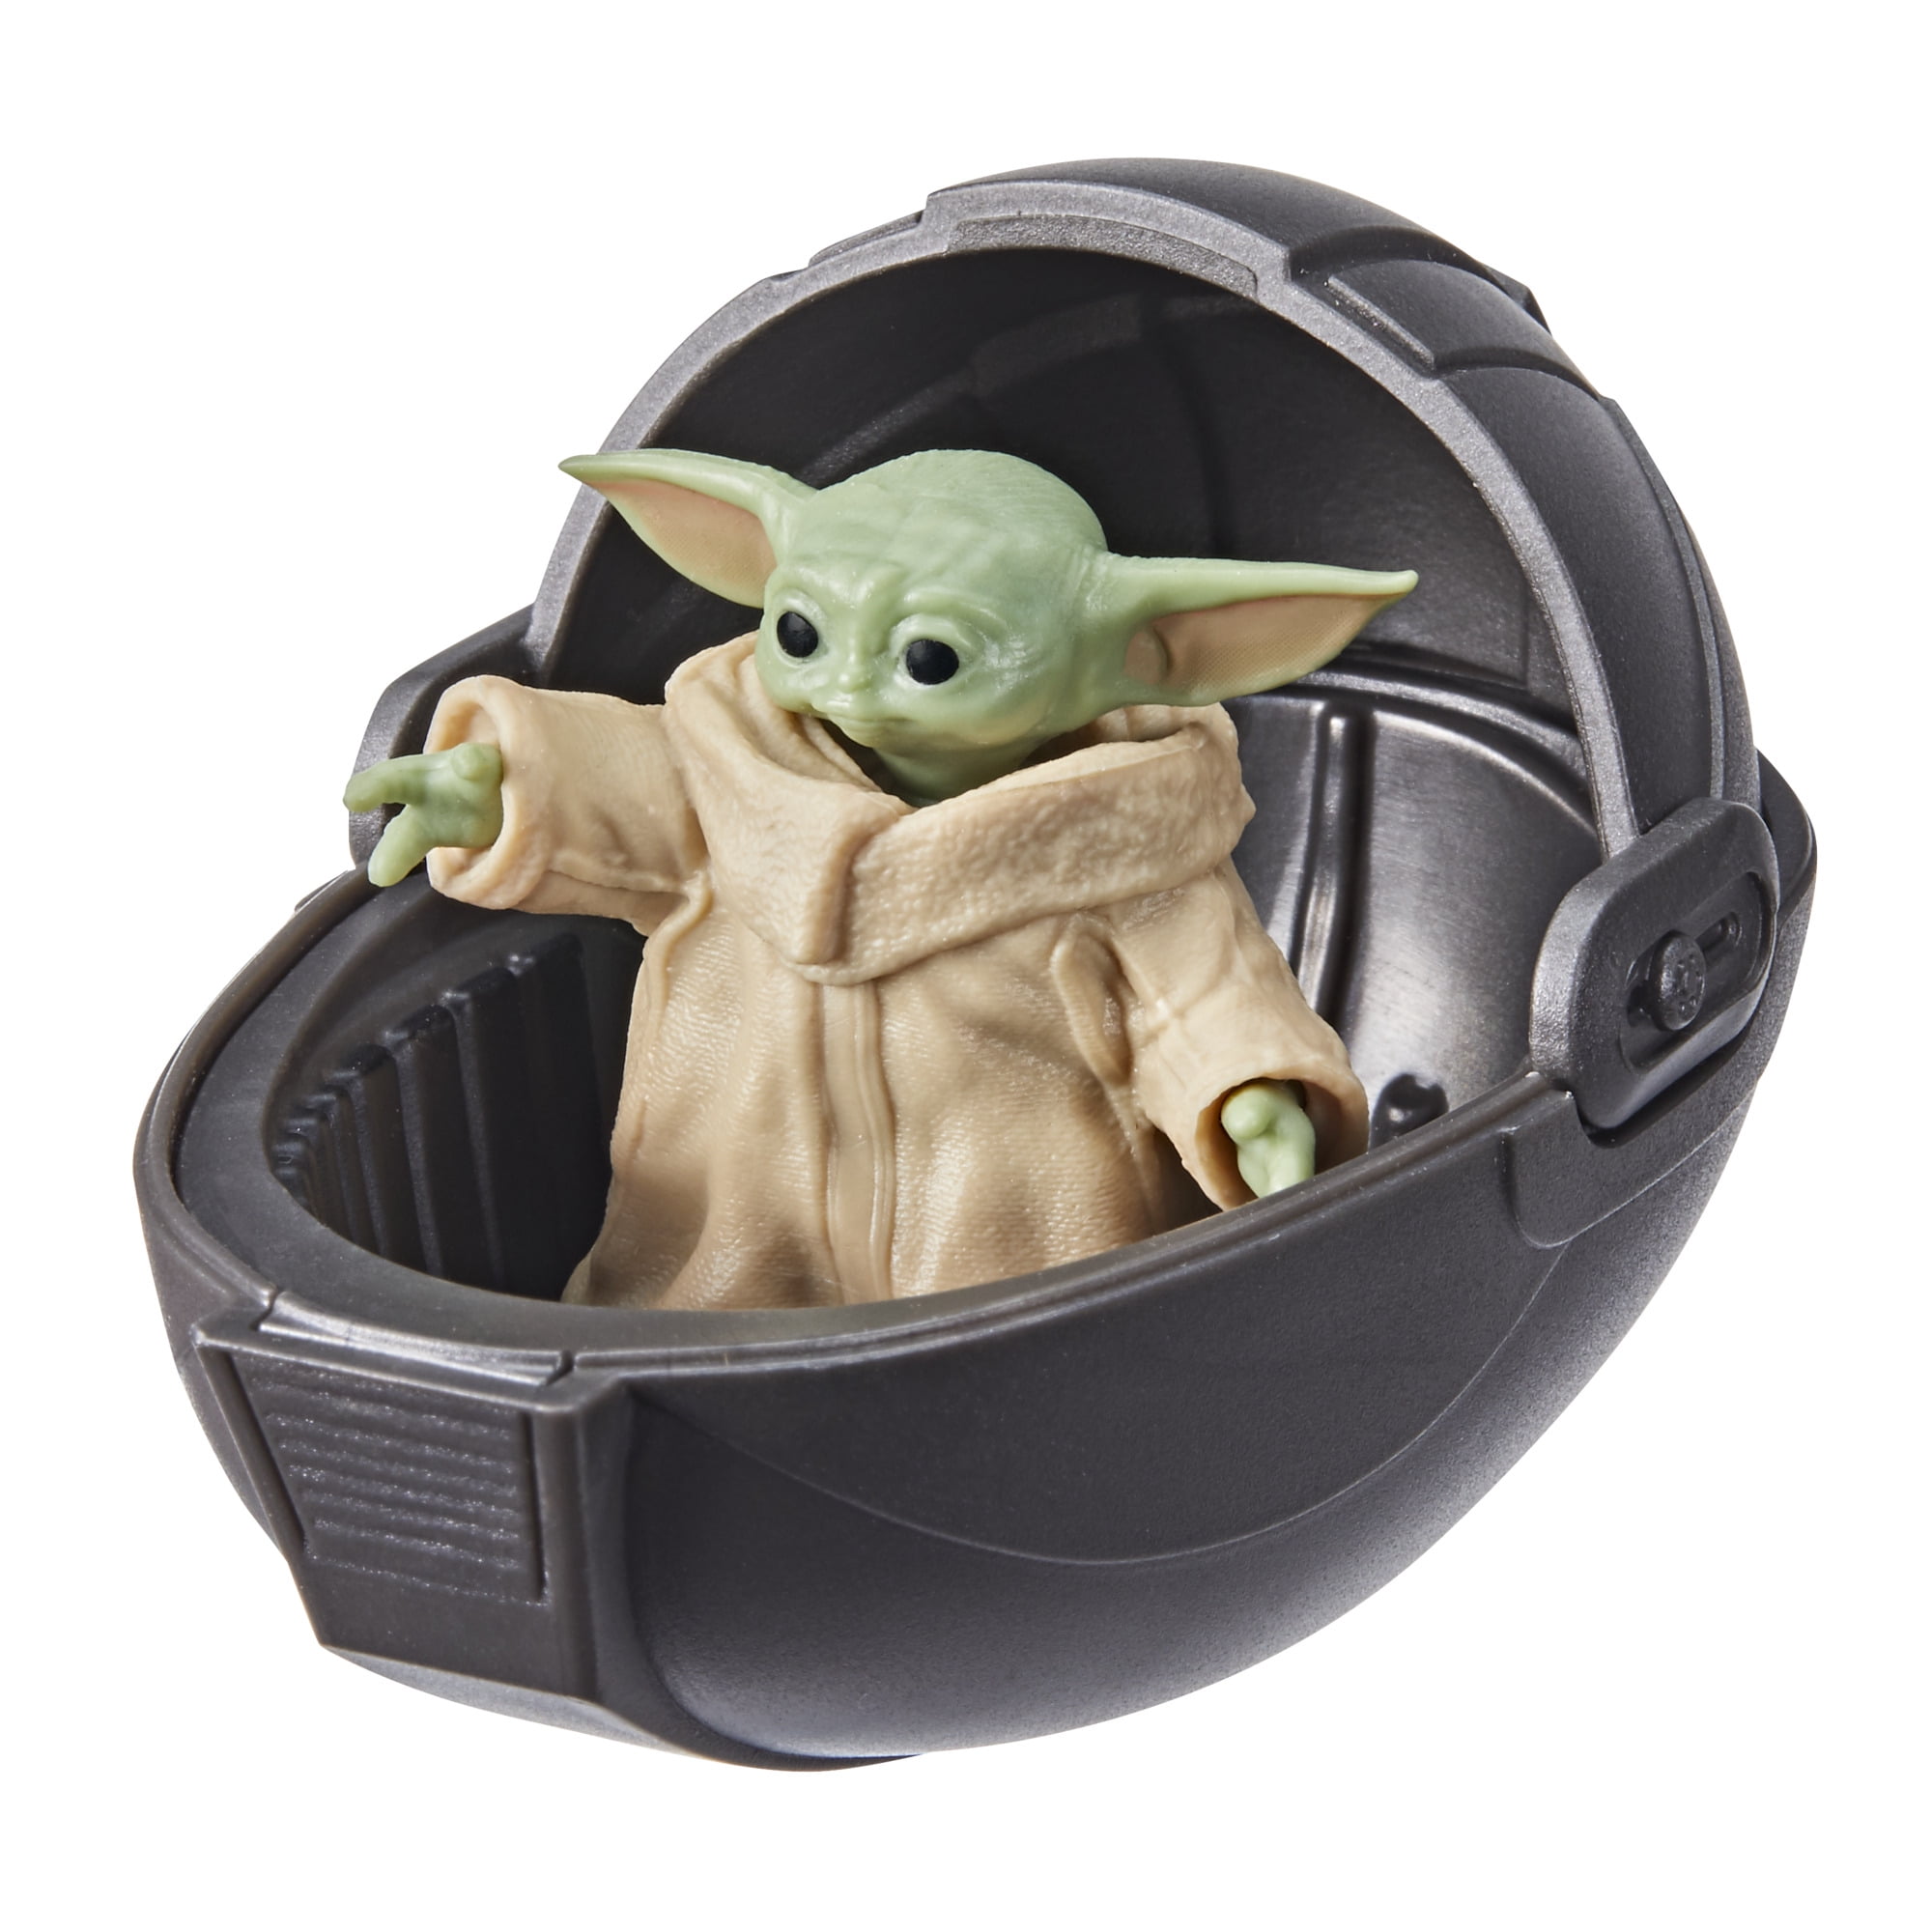 Details about   The Child Baby Yoda Star Wars The Mandalorian Mattel 4 Accessories Mattel NWB 